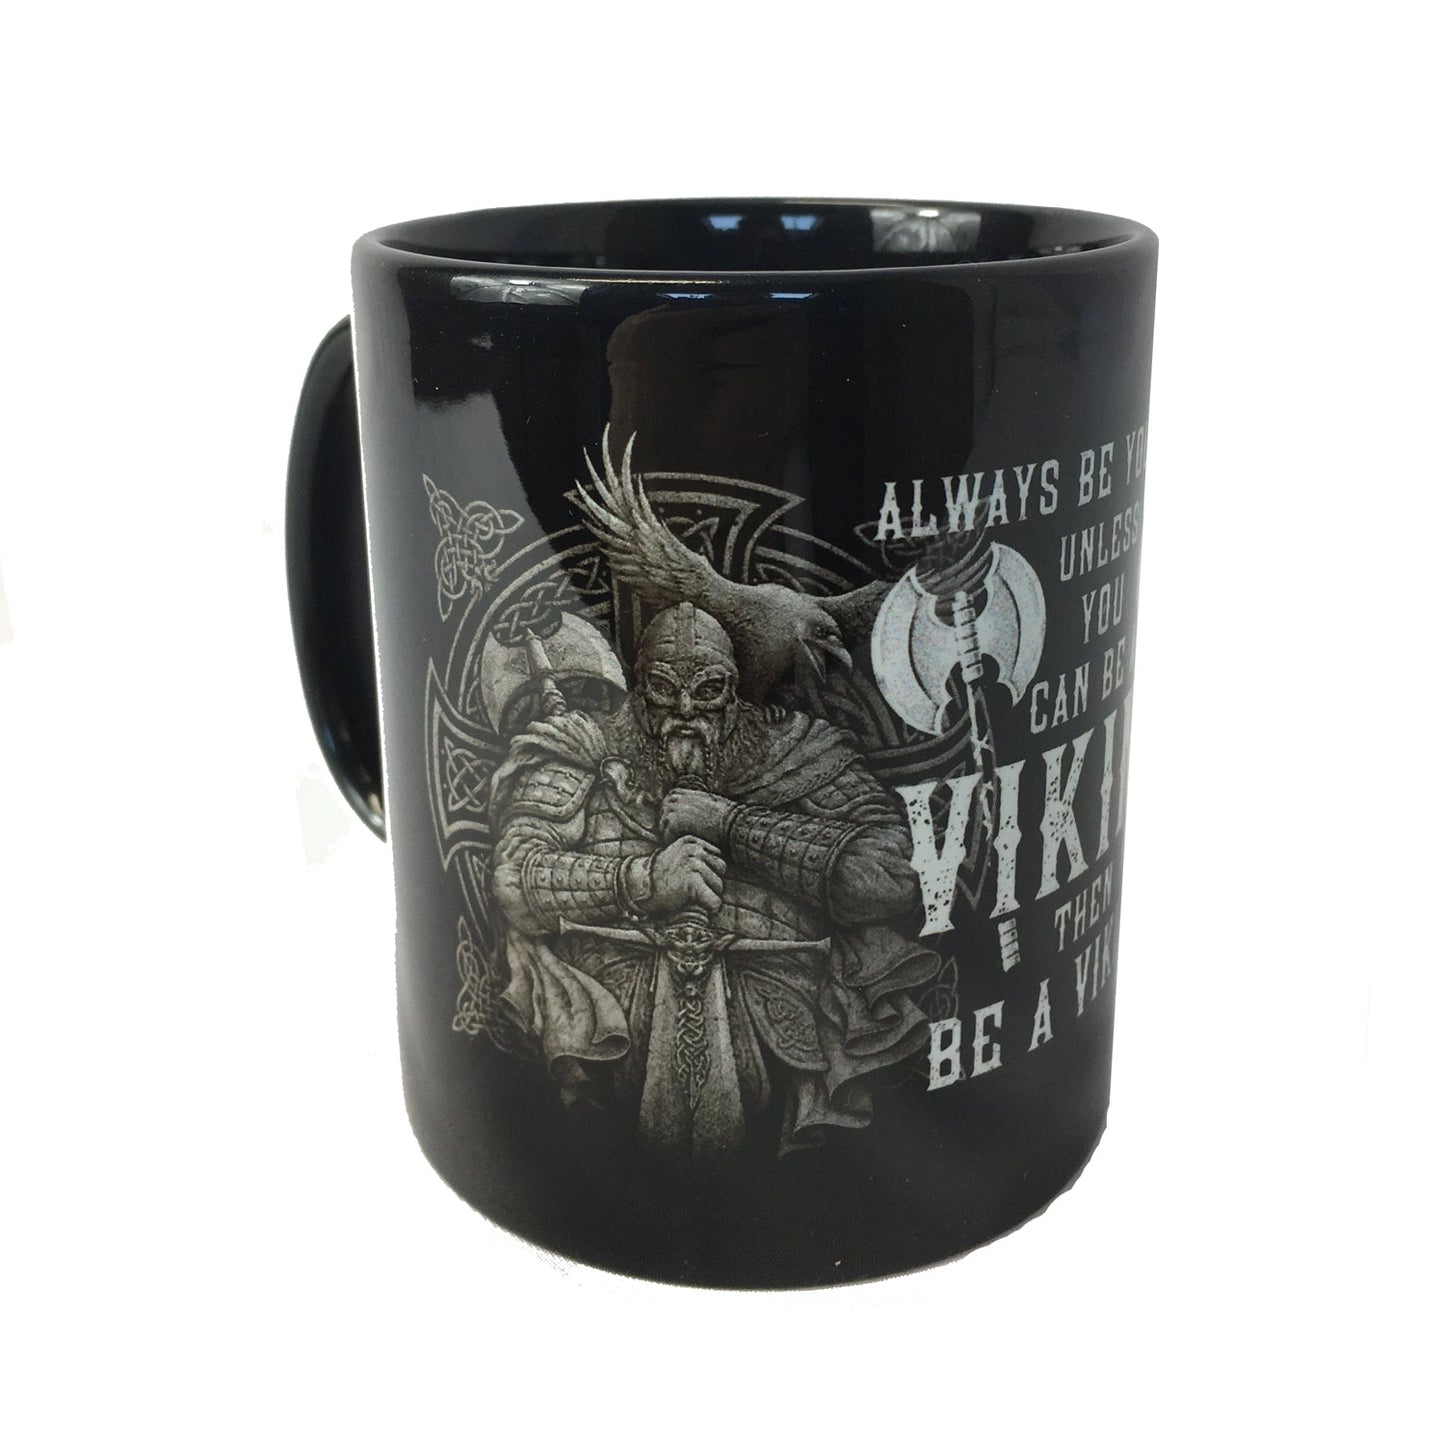 Be a Viking, Coffee Mug